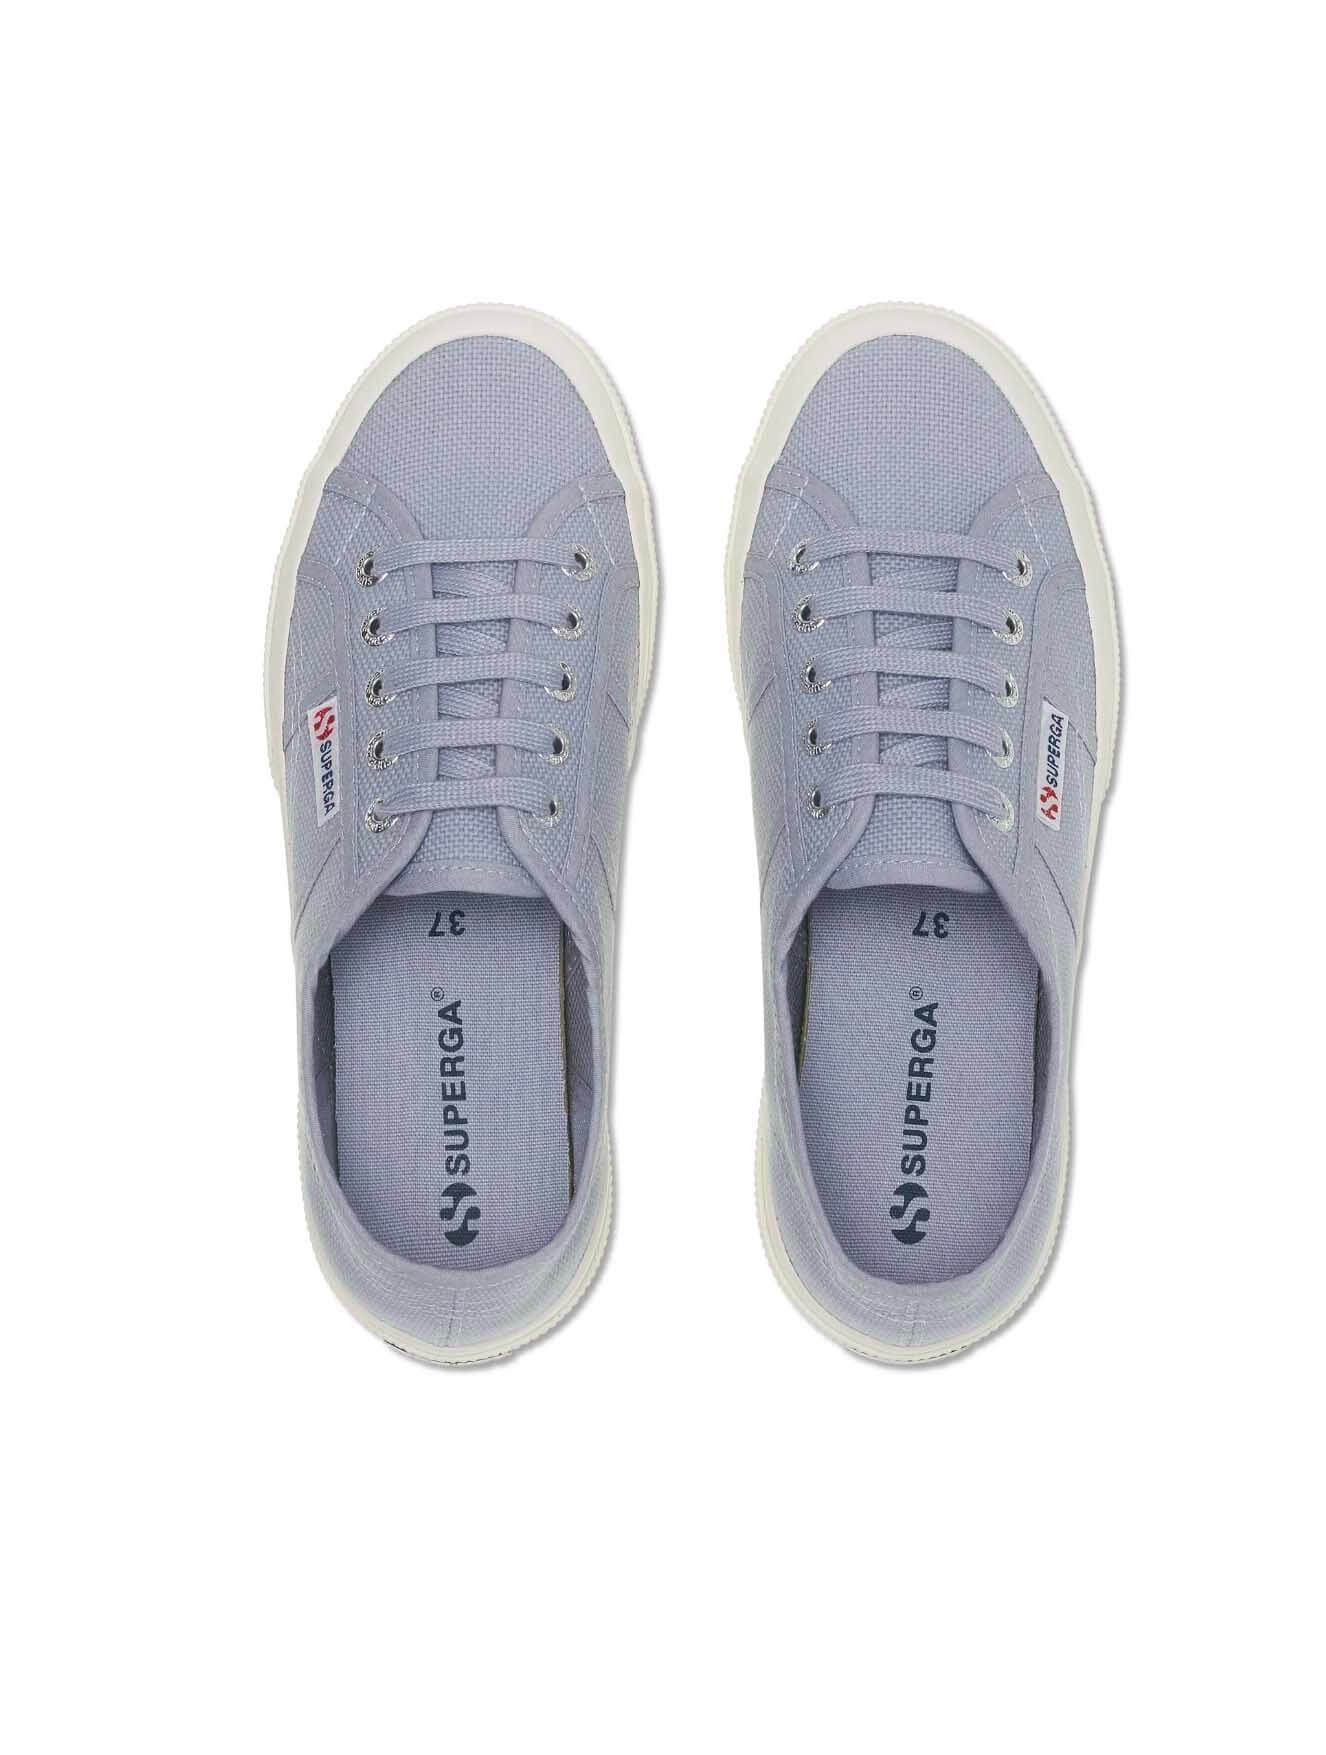 Superga Sneakers Silver Size 38 | eBay